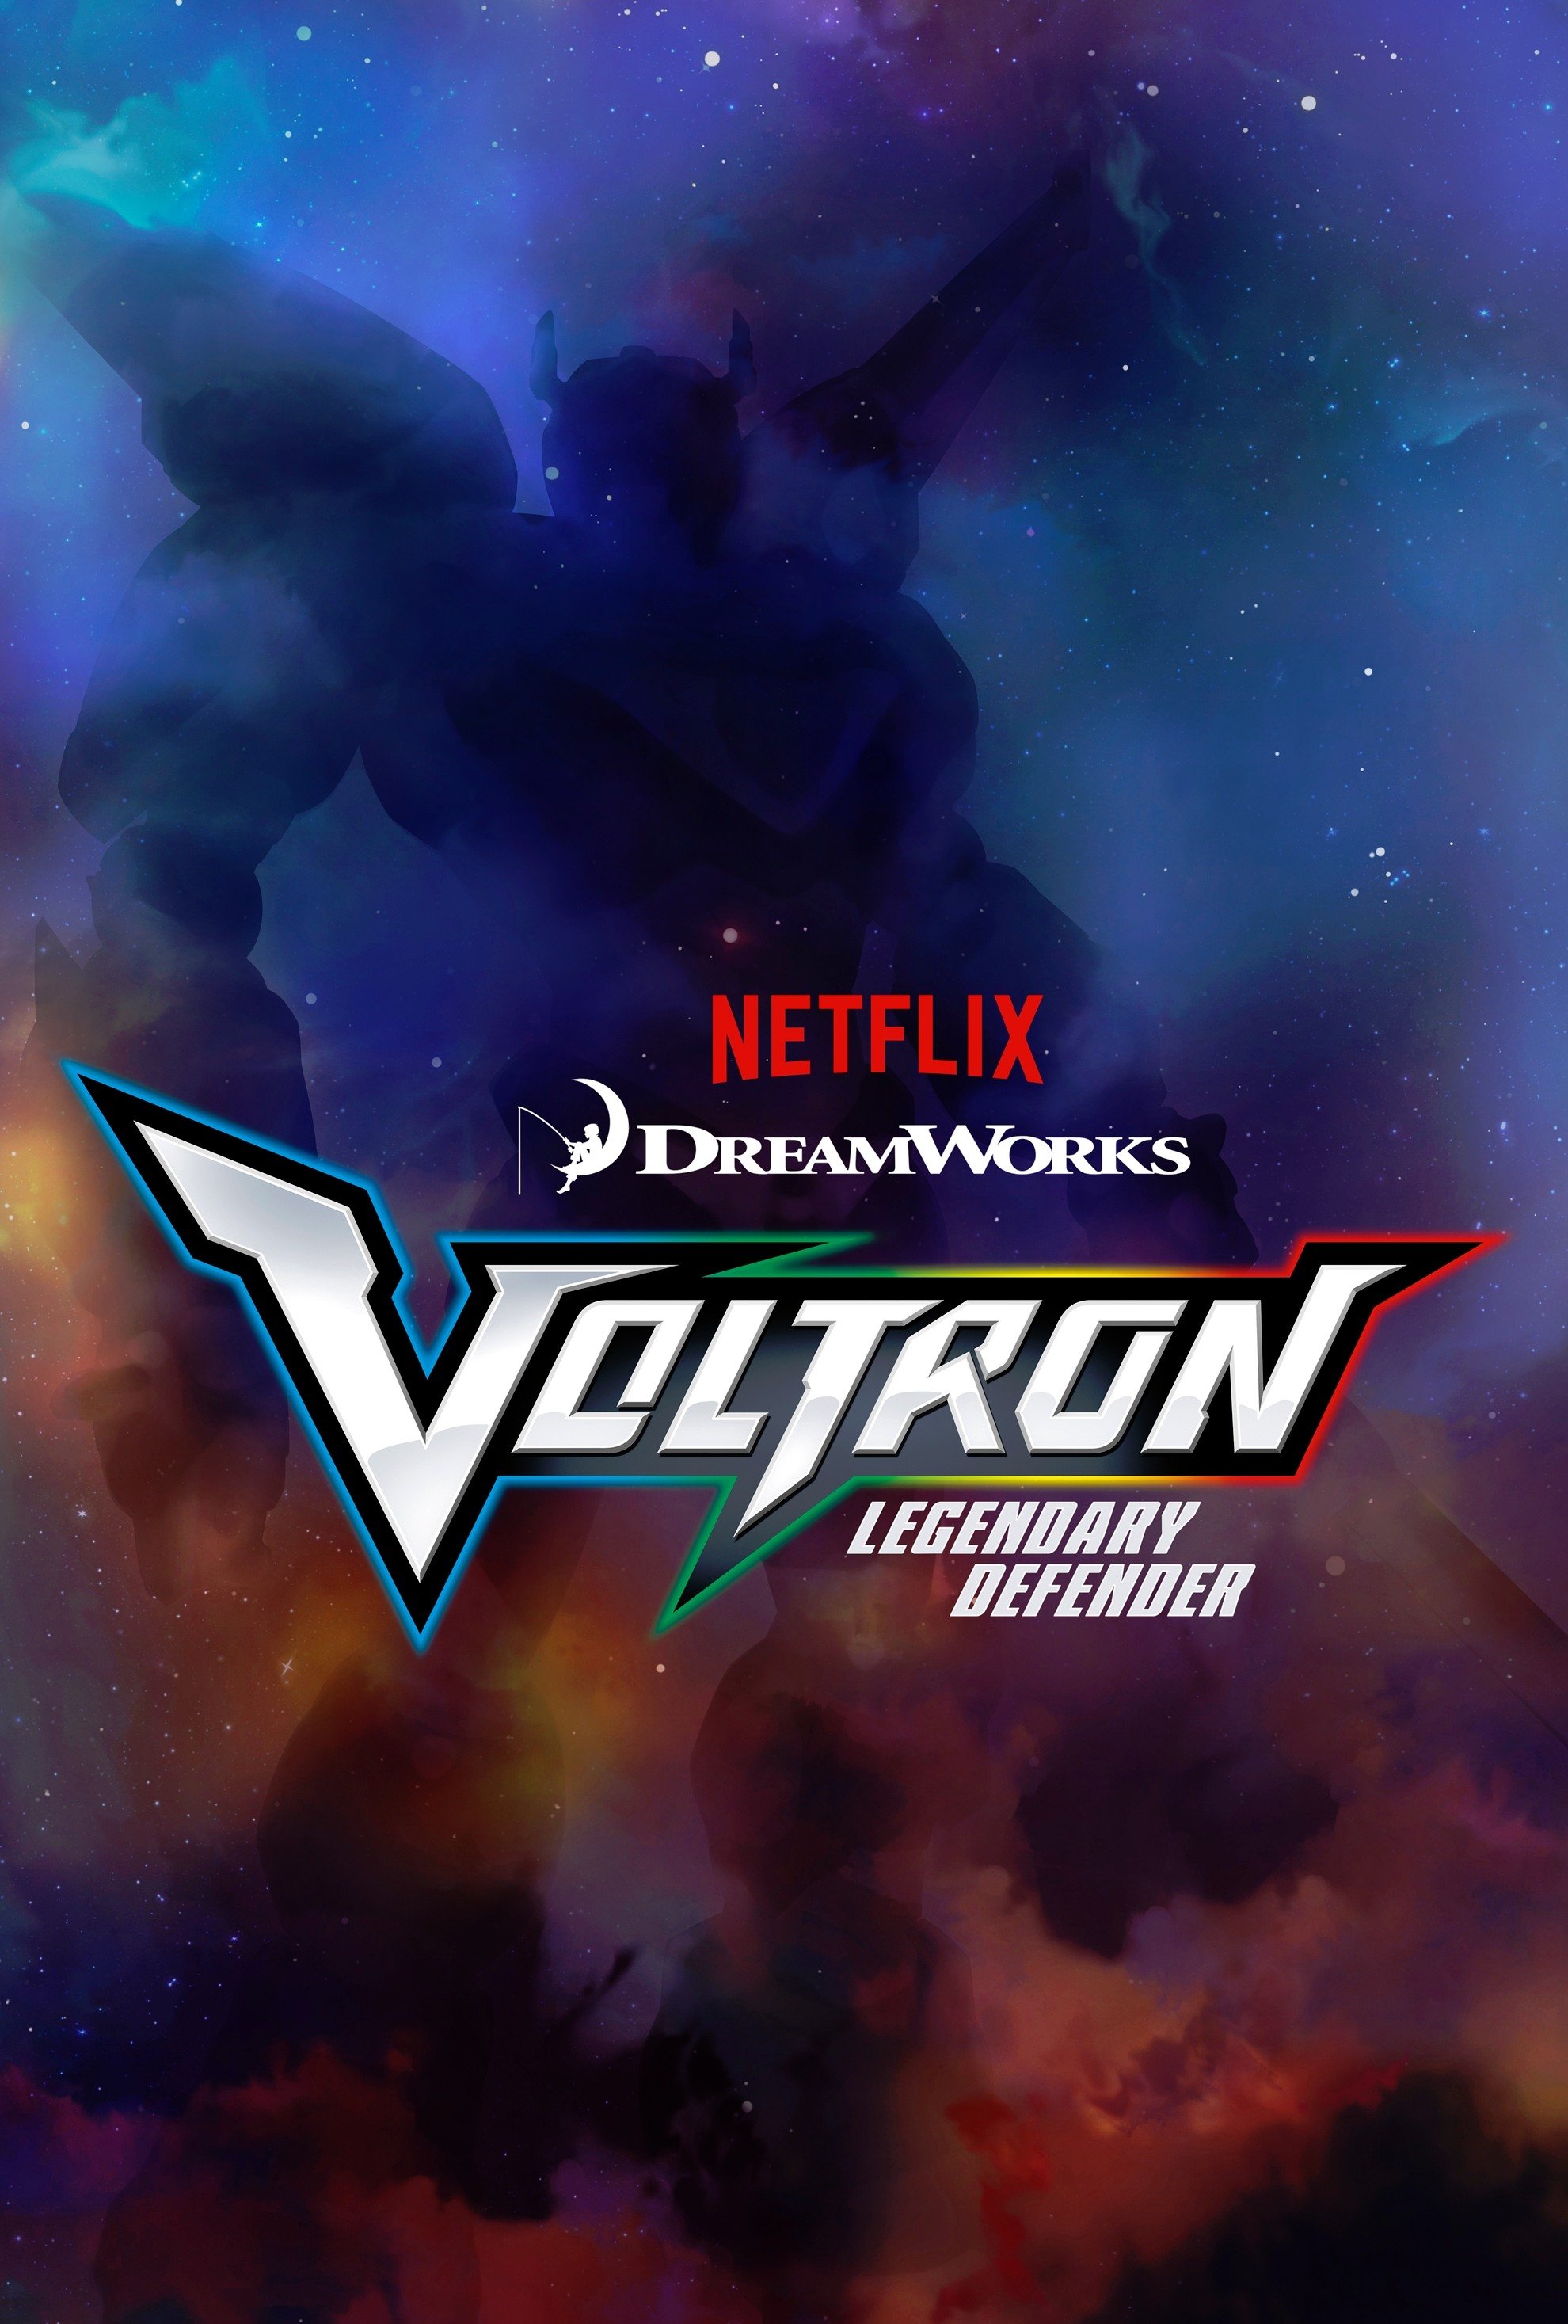 Voltron Legendary Defender teaser poster